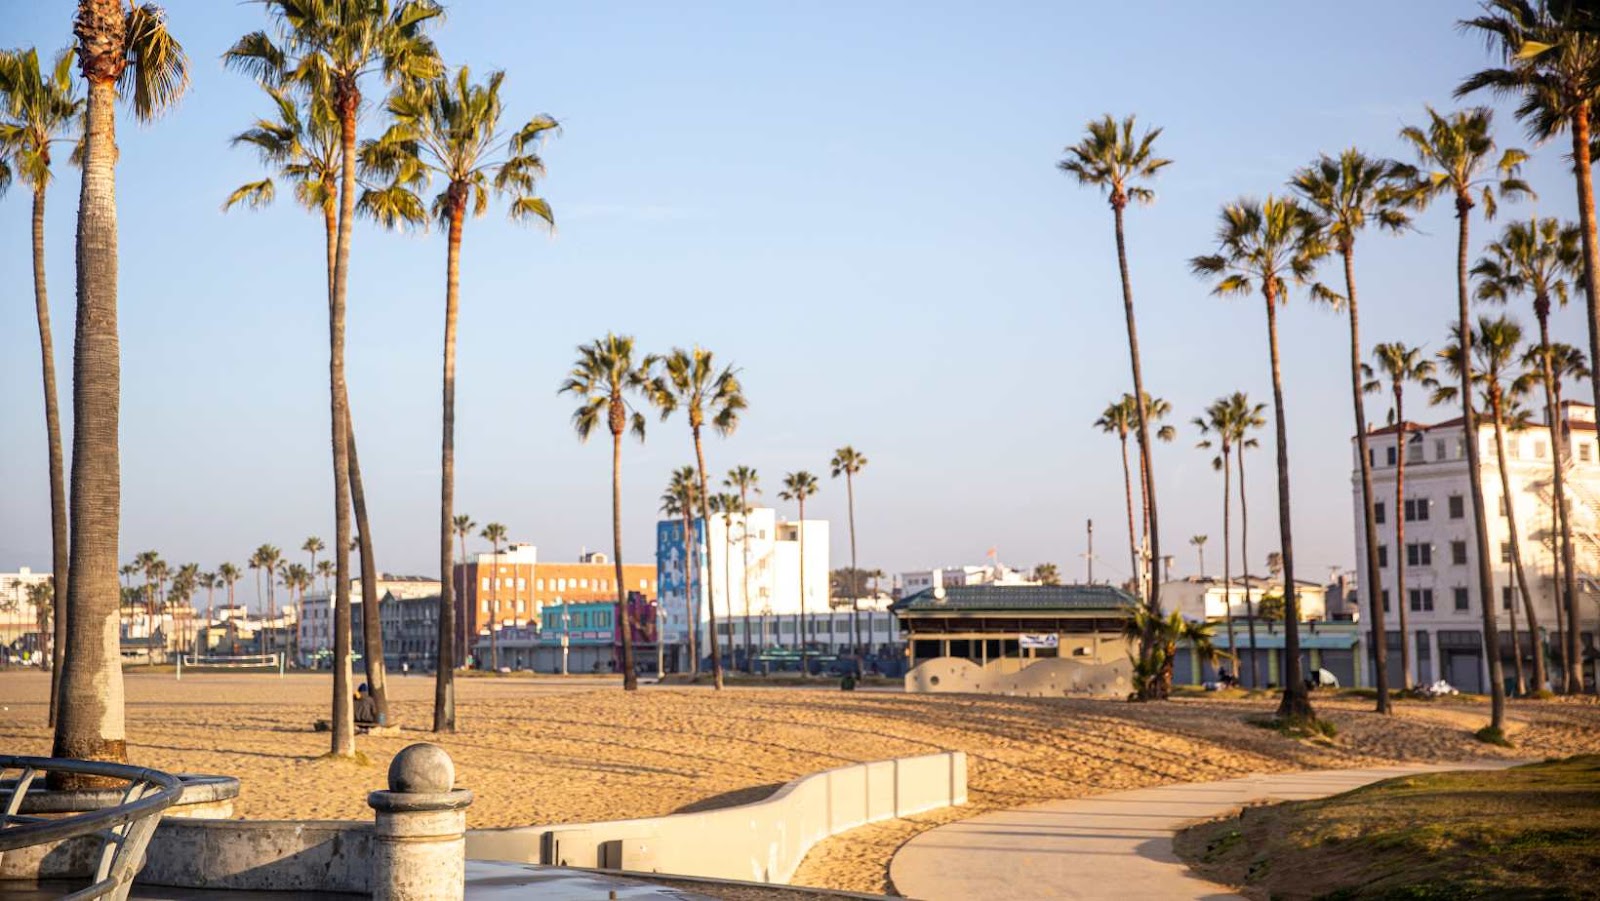 Plan a Solo Trip to Venice Beach